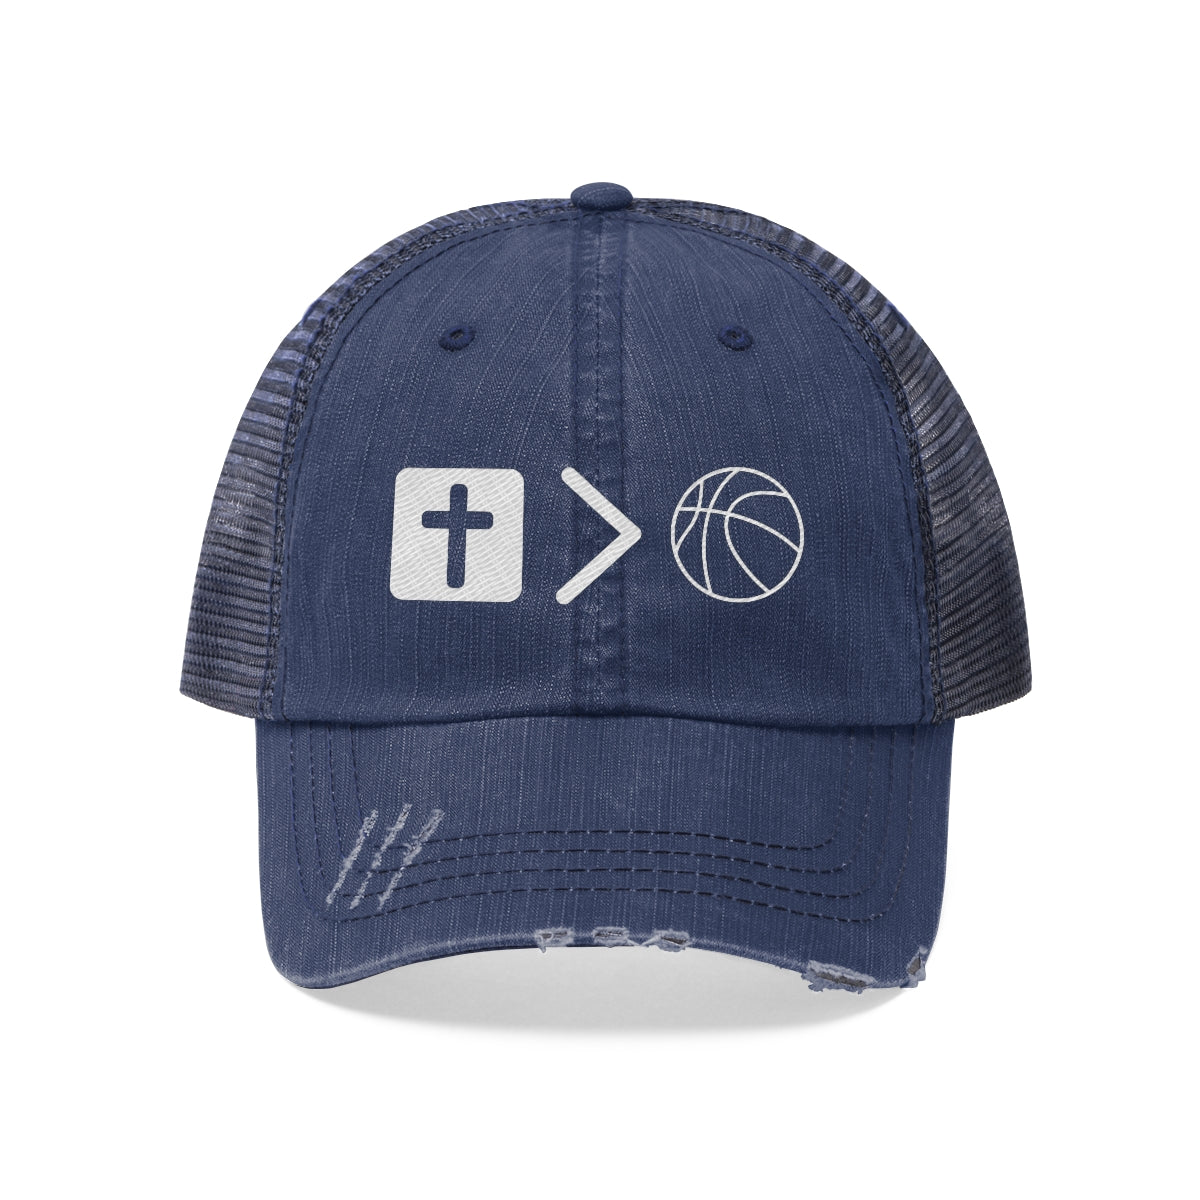 Jesus is bigger than basketball Mesh Hat (3 colors)